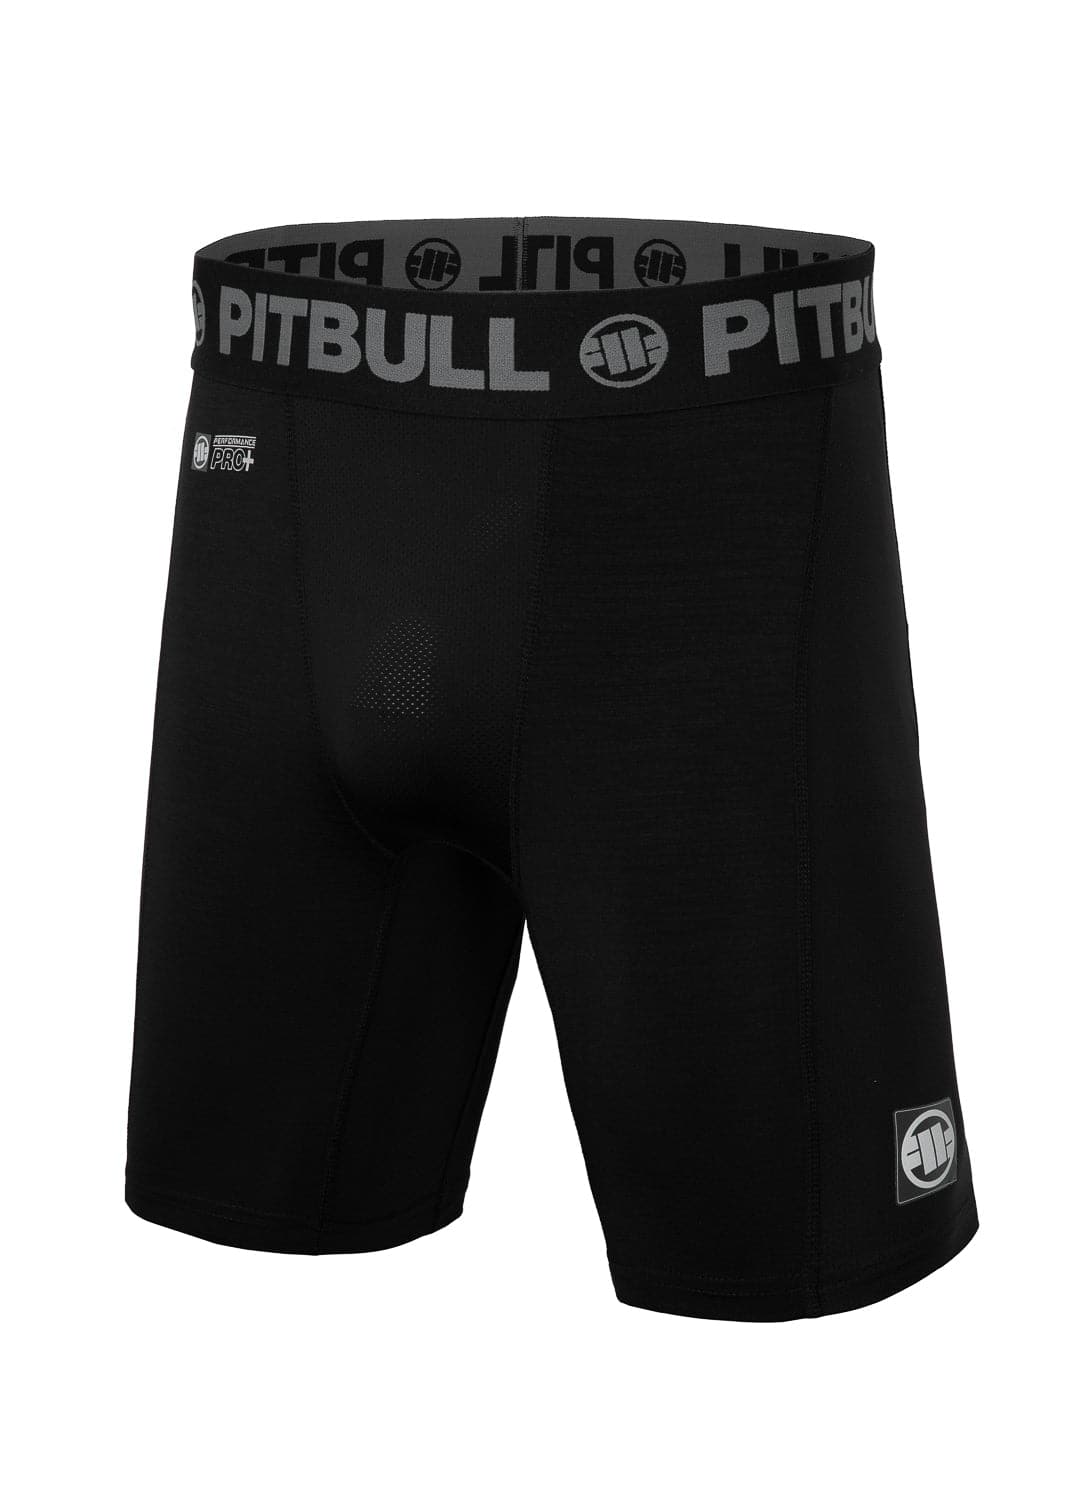 NEW LOGO Performance Black Compression Shorts - Pitbull West Coast International Store 